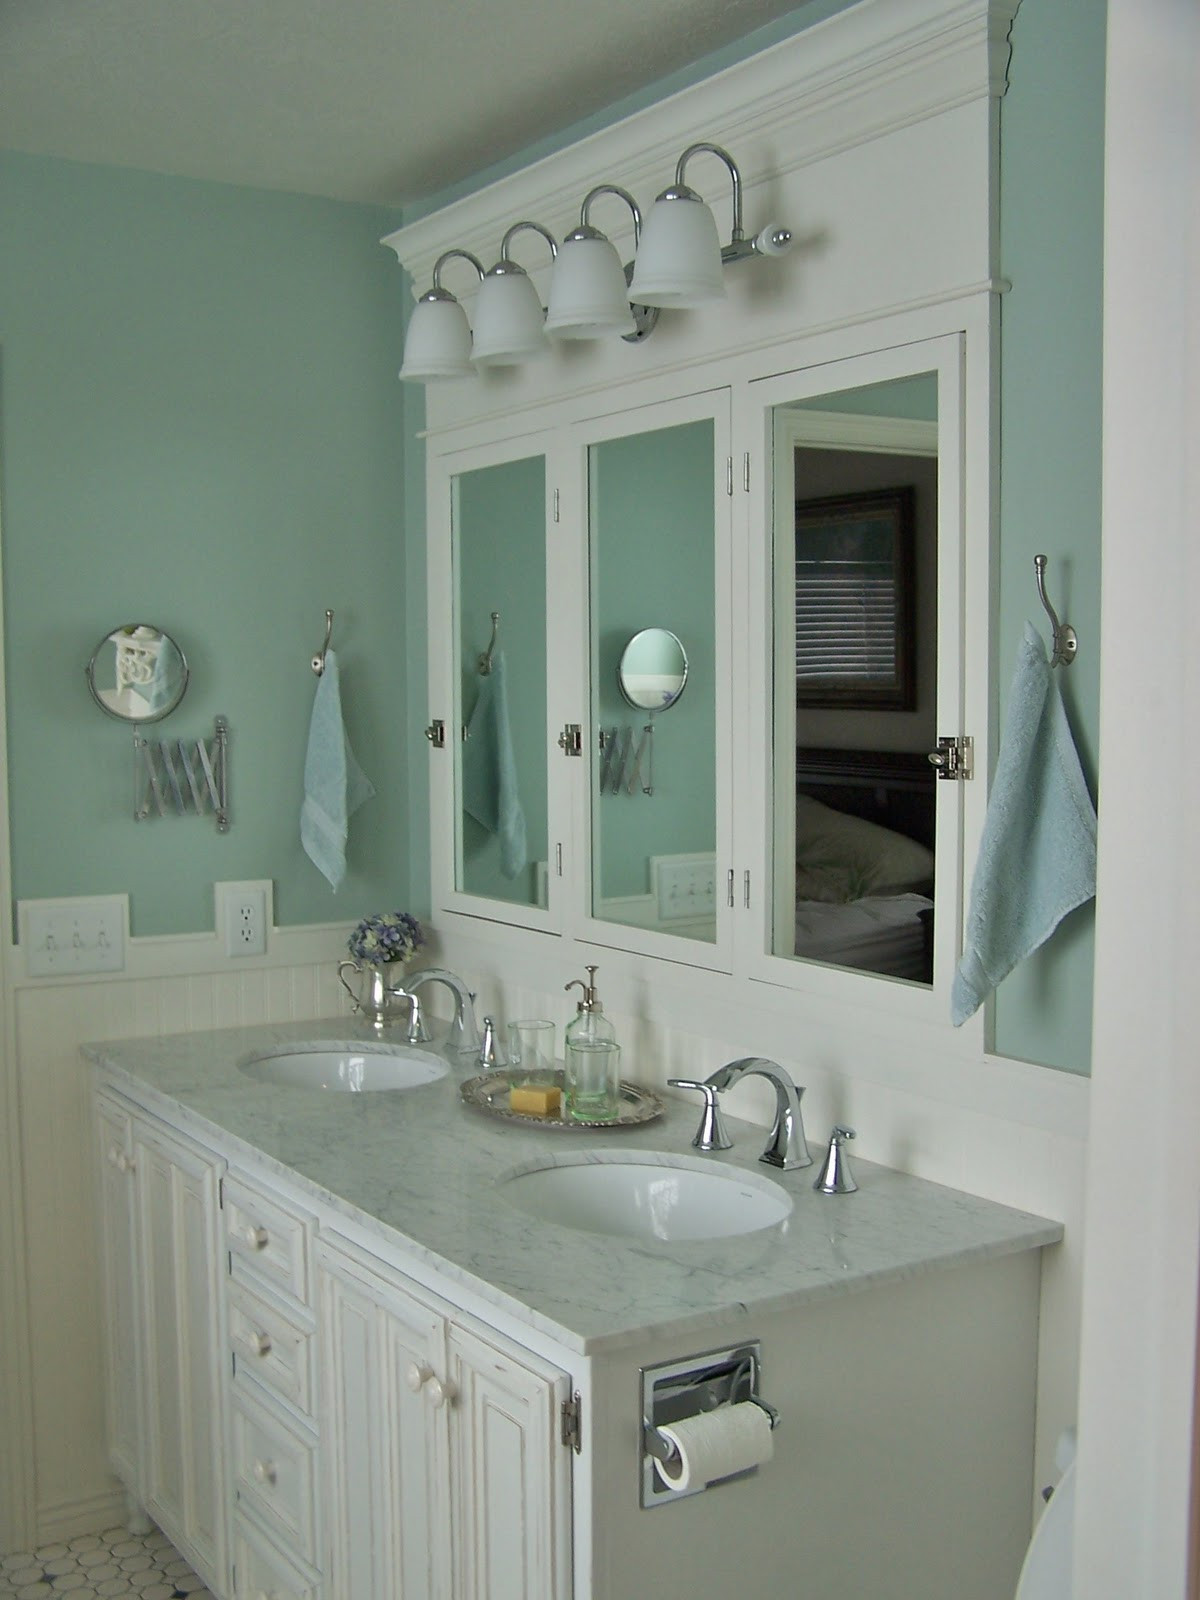 Master Bathroom Mirror Ideas
 Remodelaholic